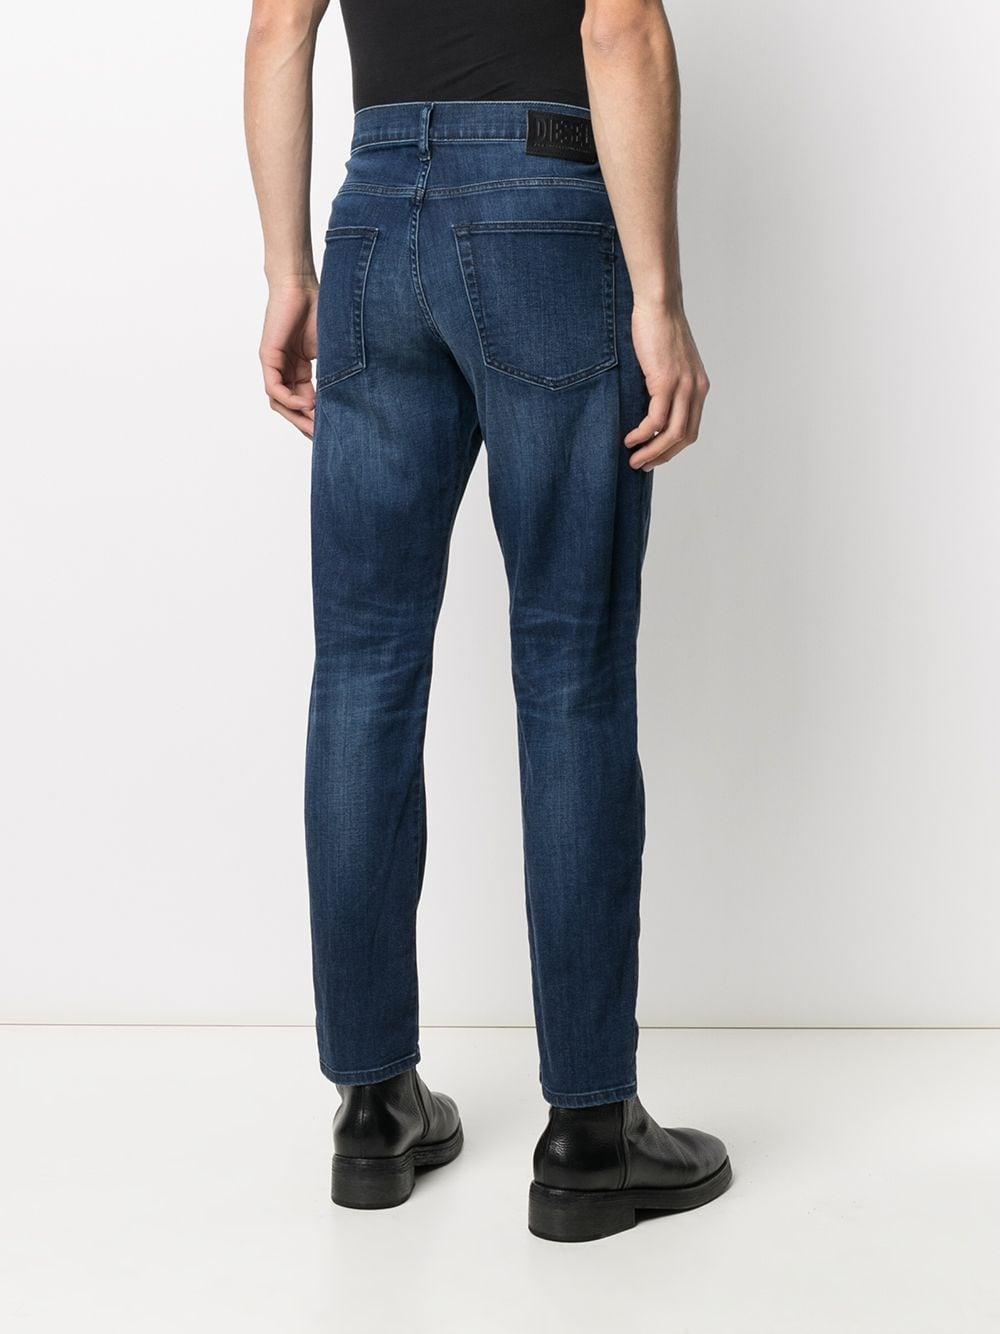 DIESEL Denim D-fining Mid-rise Tapered Jeans in Blue for Men - Lyst